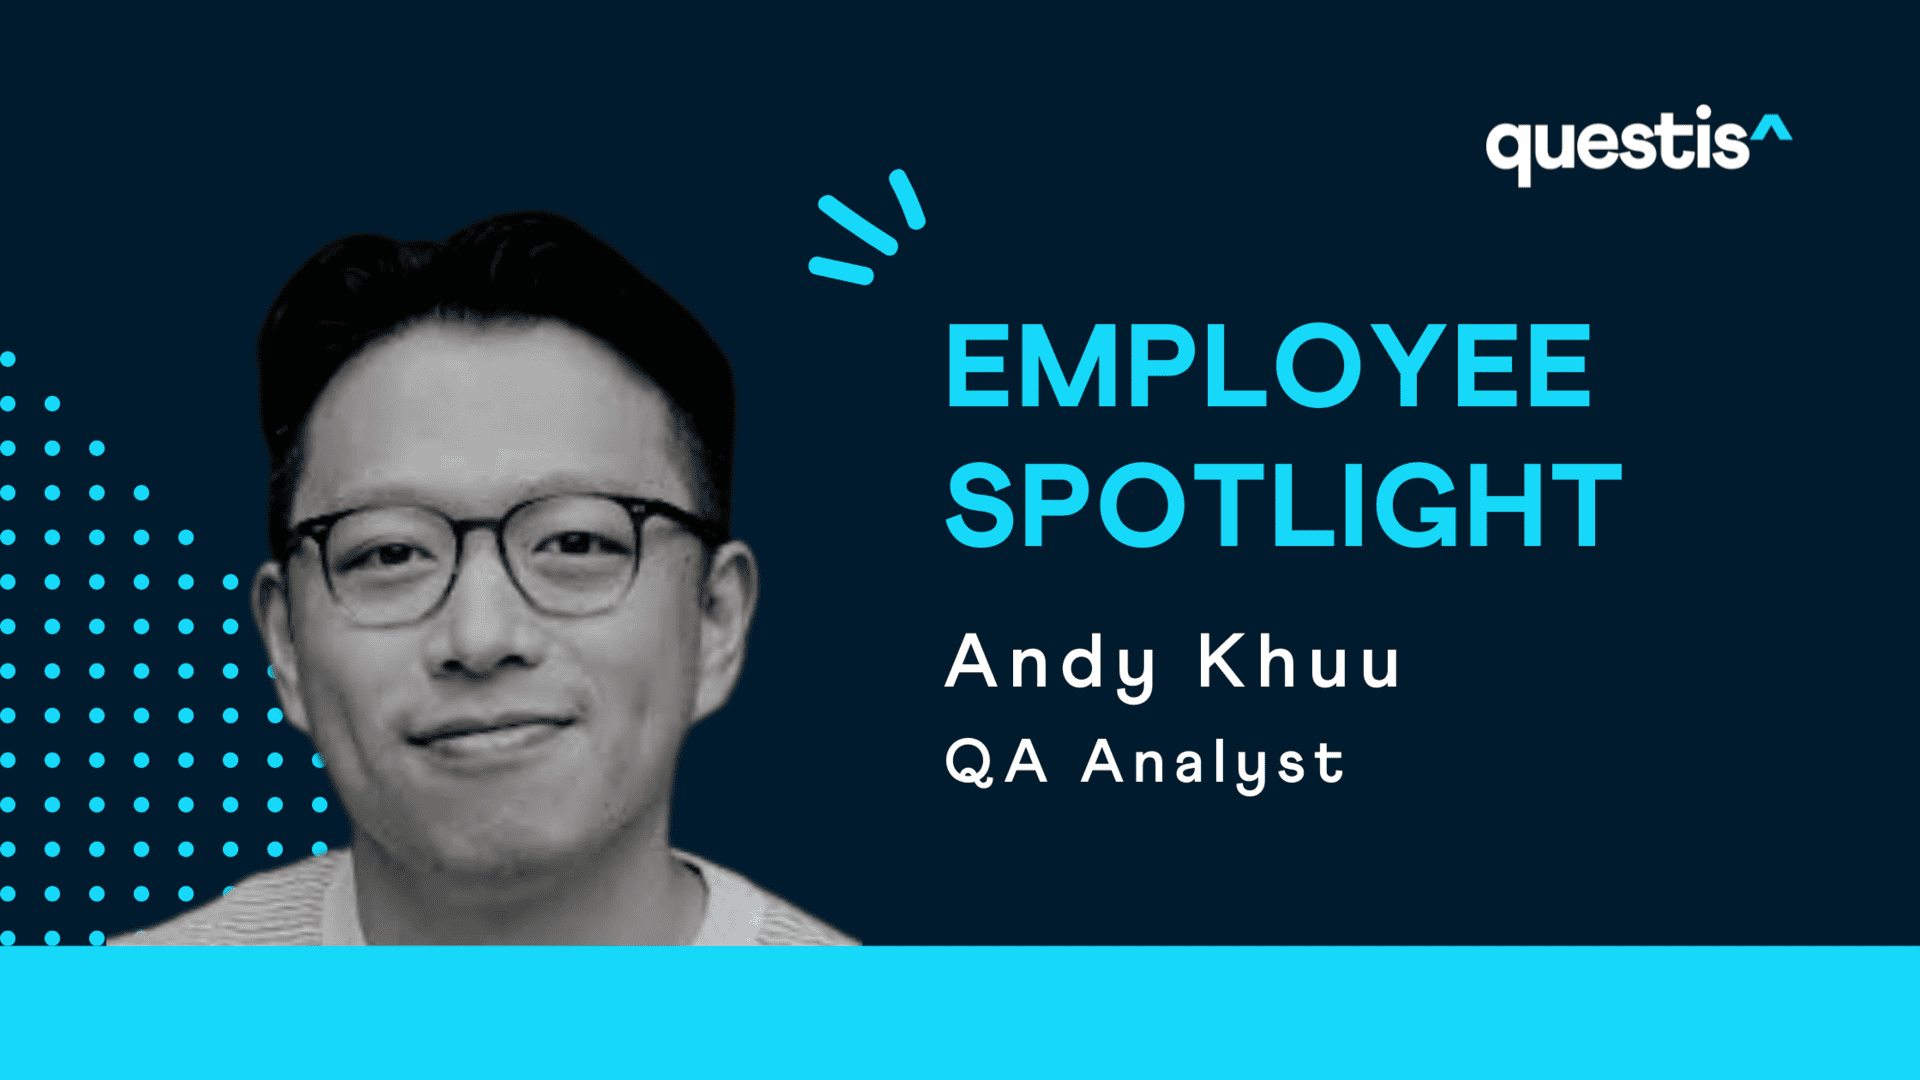 Andy Khuu Employee Spotlight